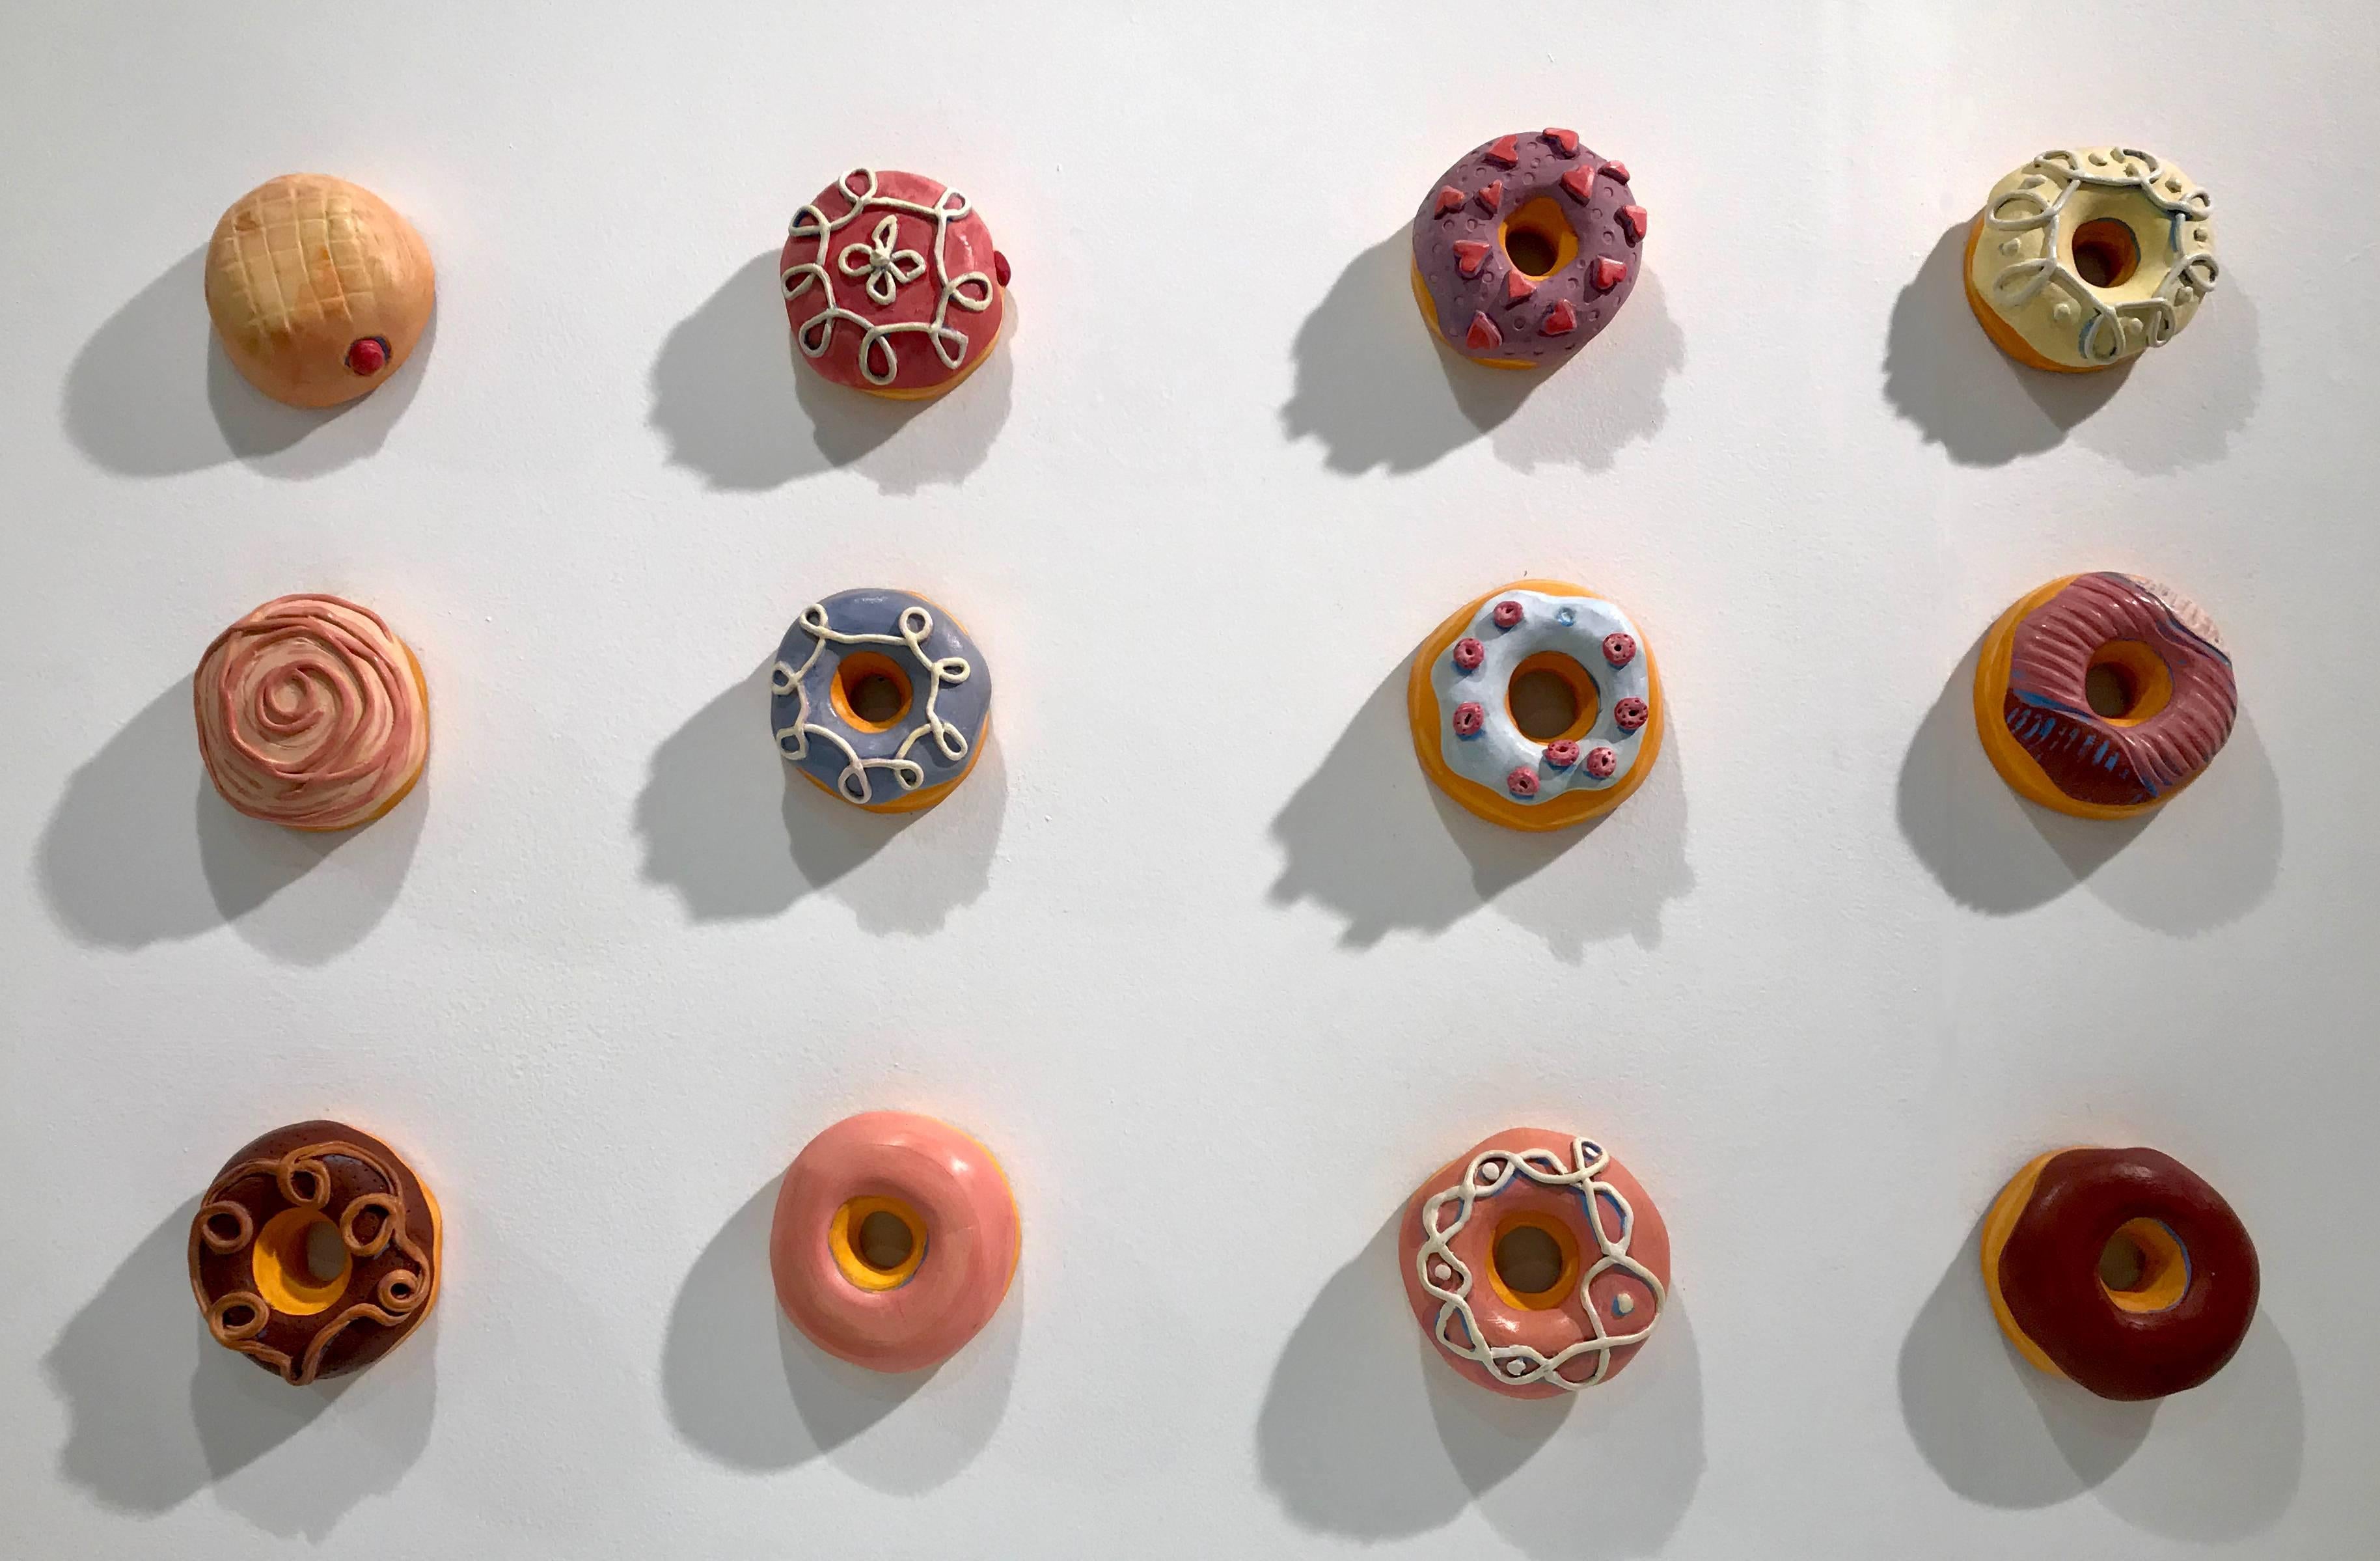 Donut #20A - Sculpture by Barbara Fiore